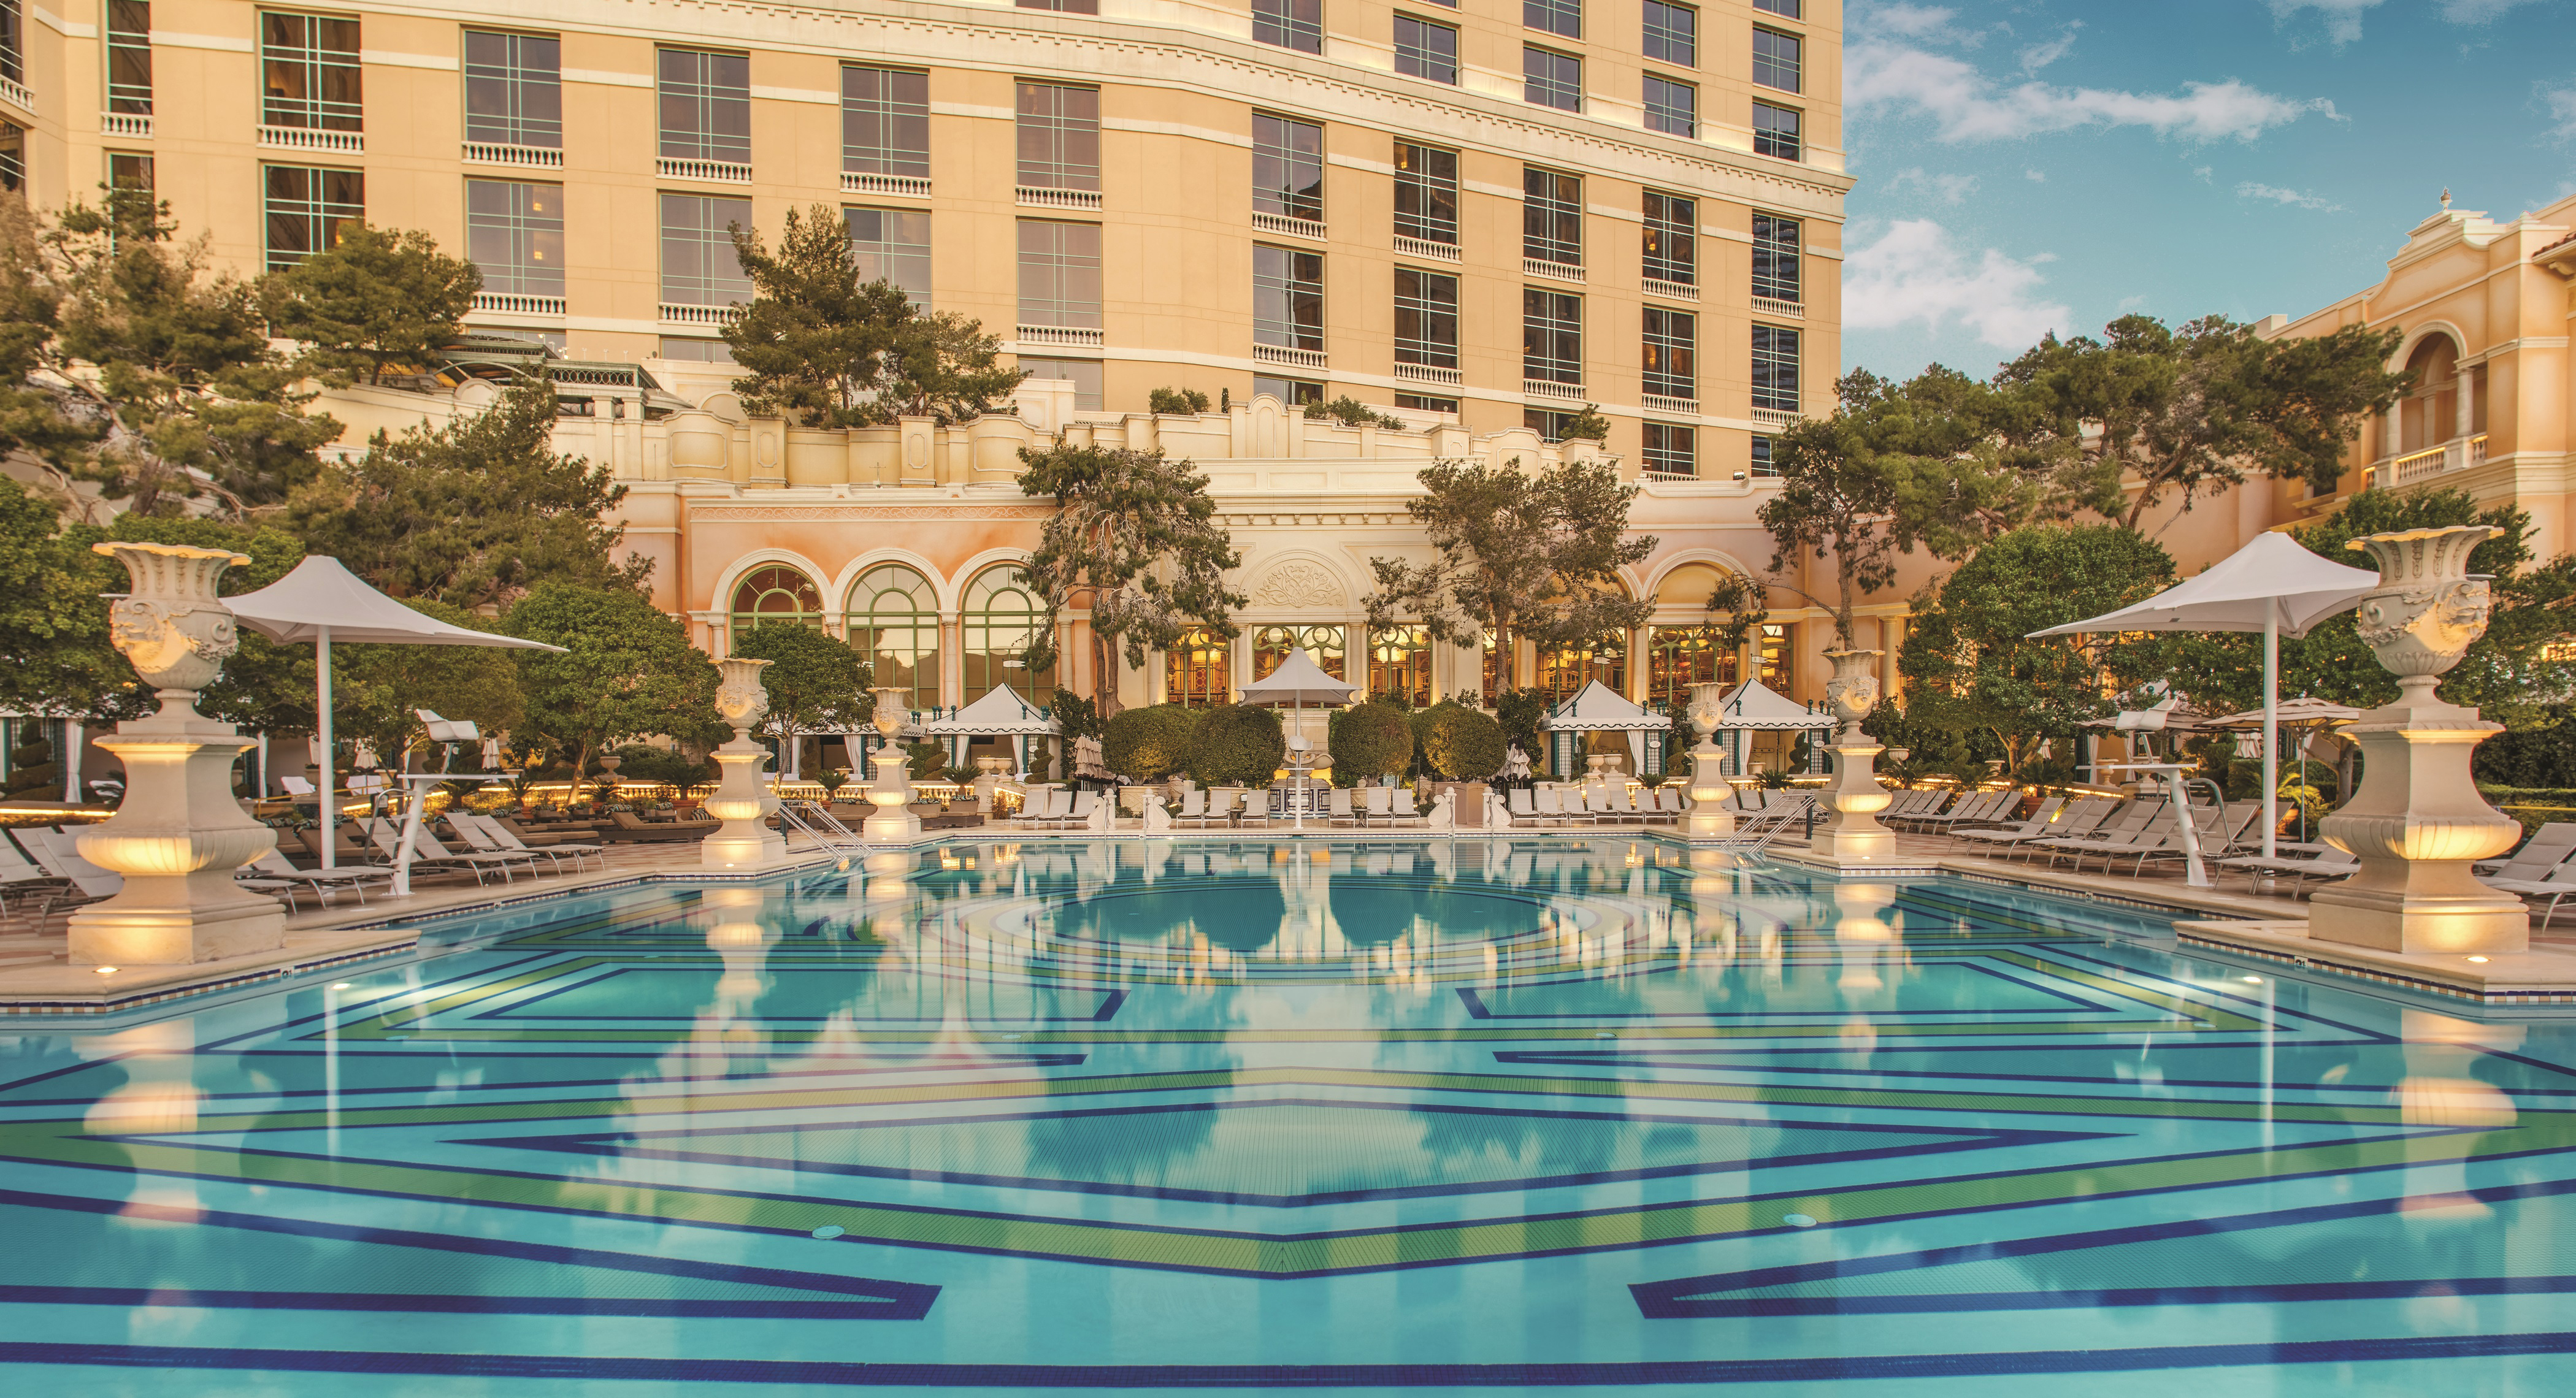 Bellagio Hotel Las Vegas Swimming Pool - ssdesignsbymikel